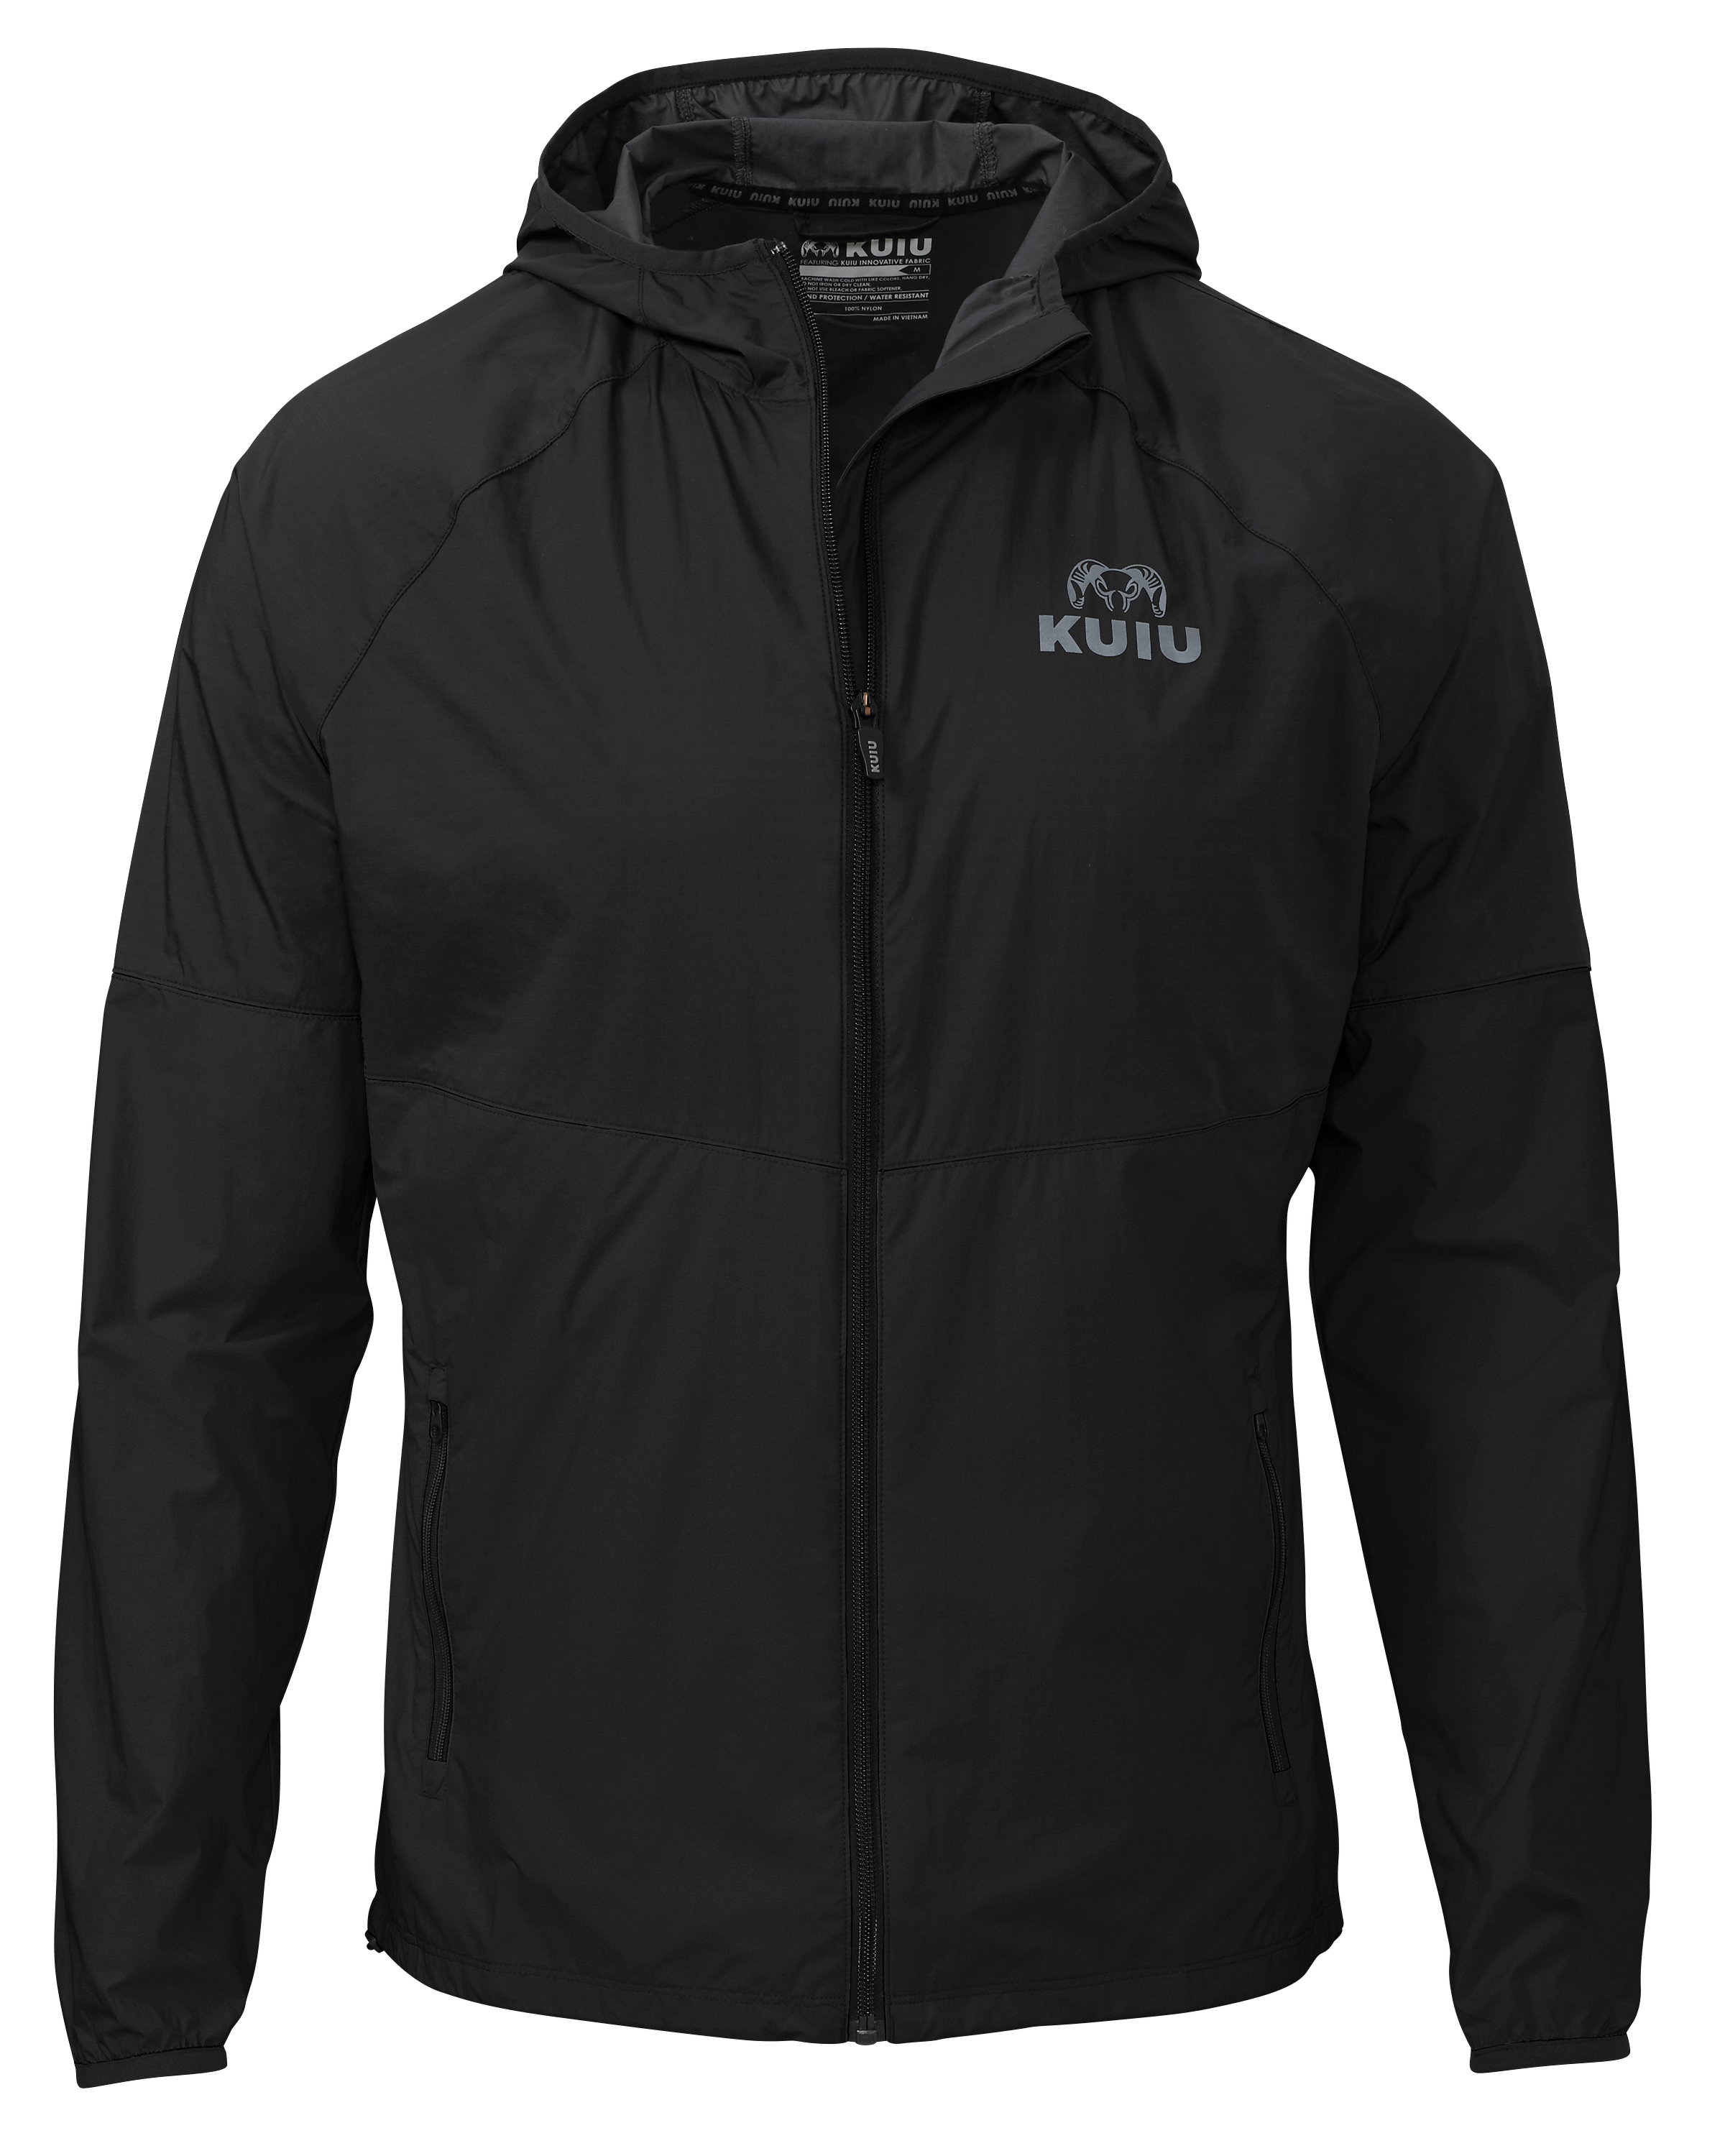 KUIU Training Tech Wind Jacket in Black | Size Medium